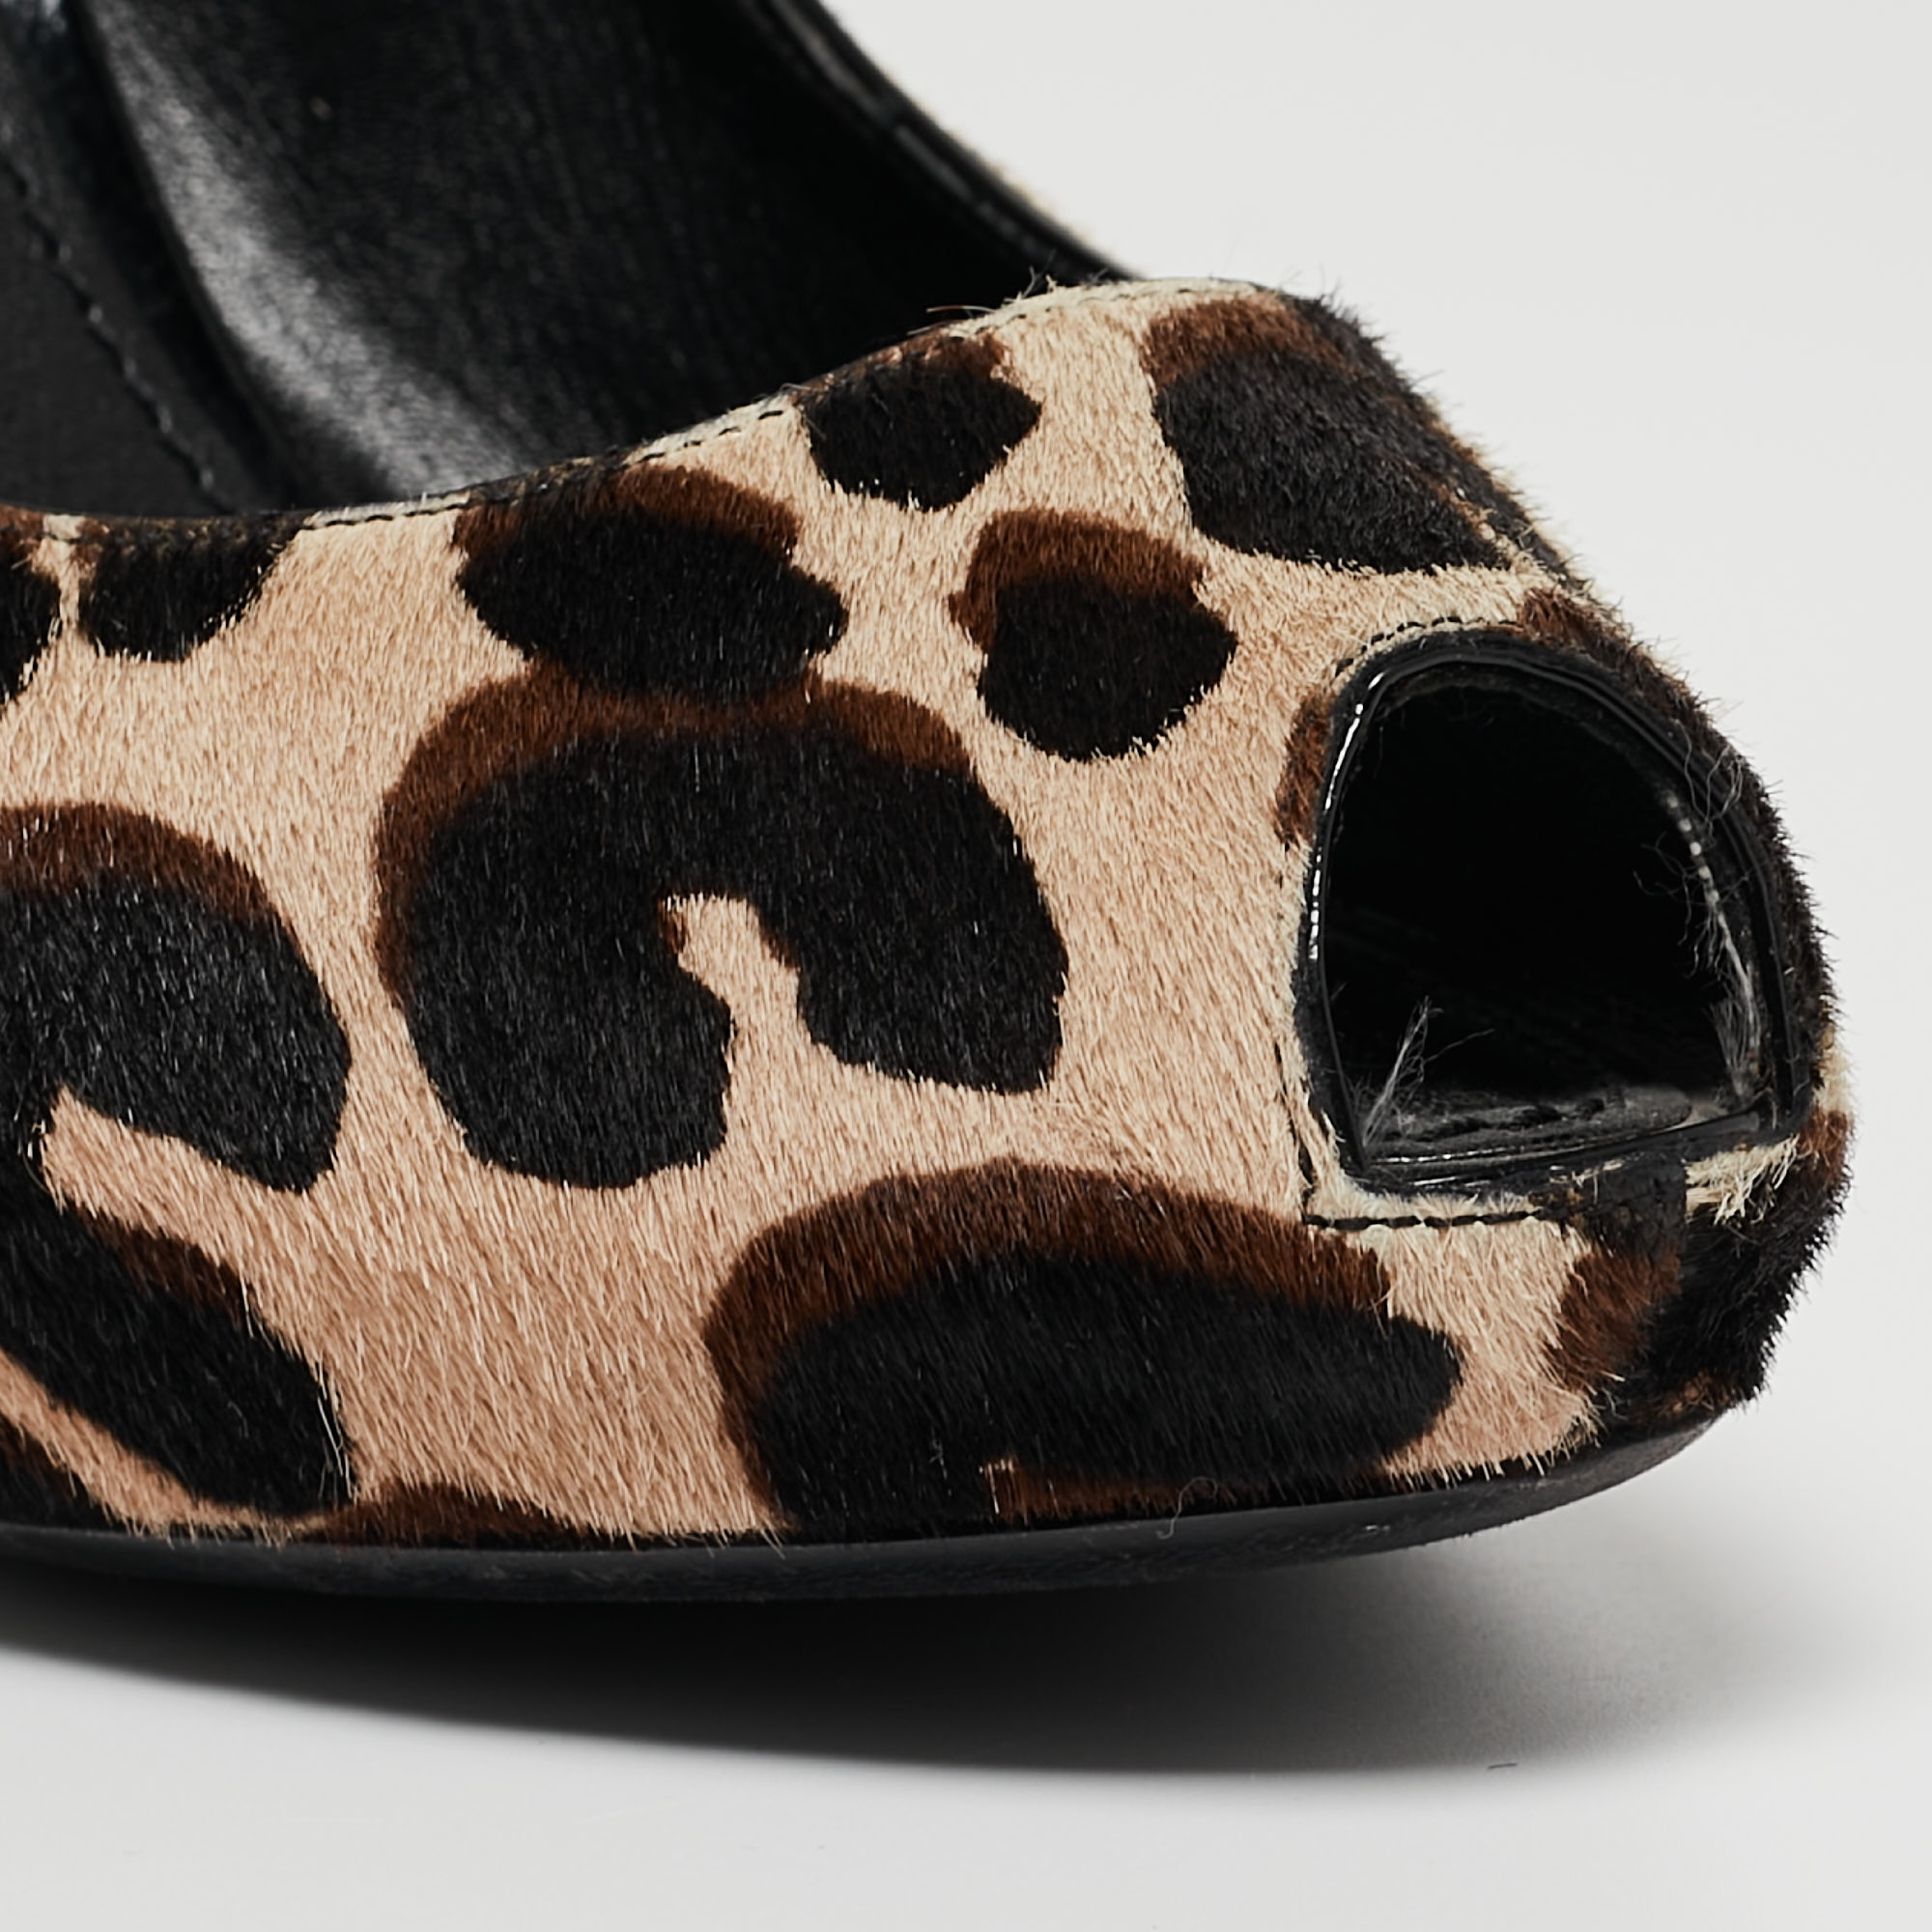 Louis Vuitton Tricolor Leopard Print Calf Hair Oh Really! Peep Toe Pumps Size 38